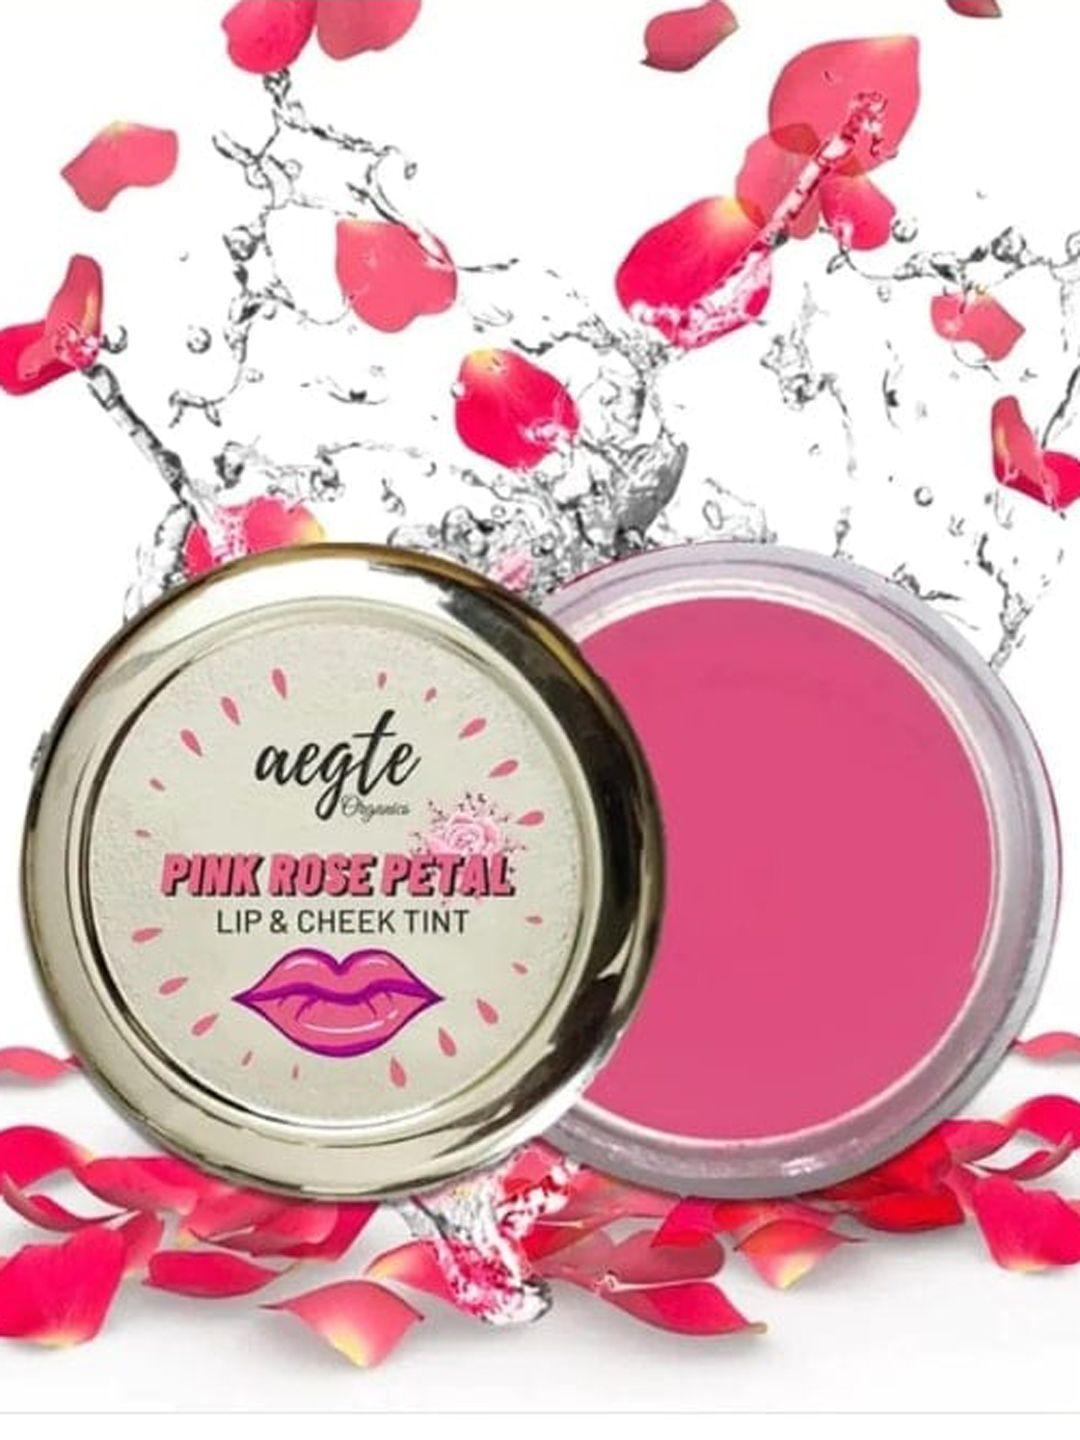 aegte organics pink rose petal lip & cheek tint balm-baby pink-15gm